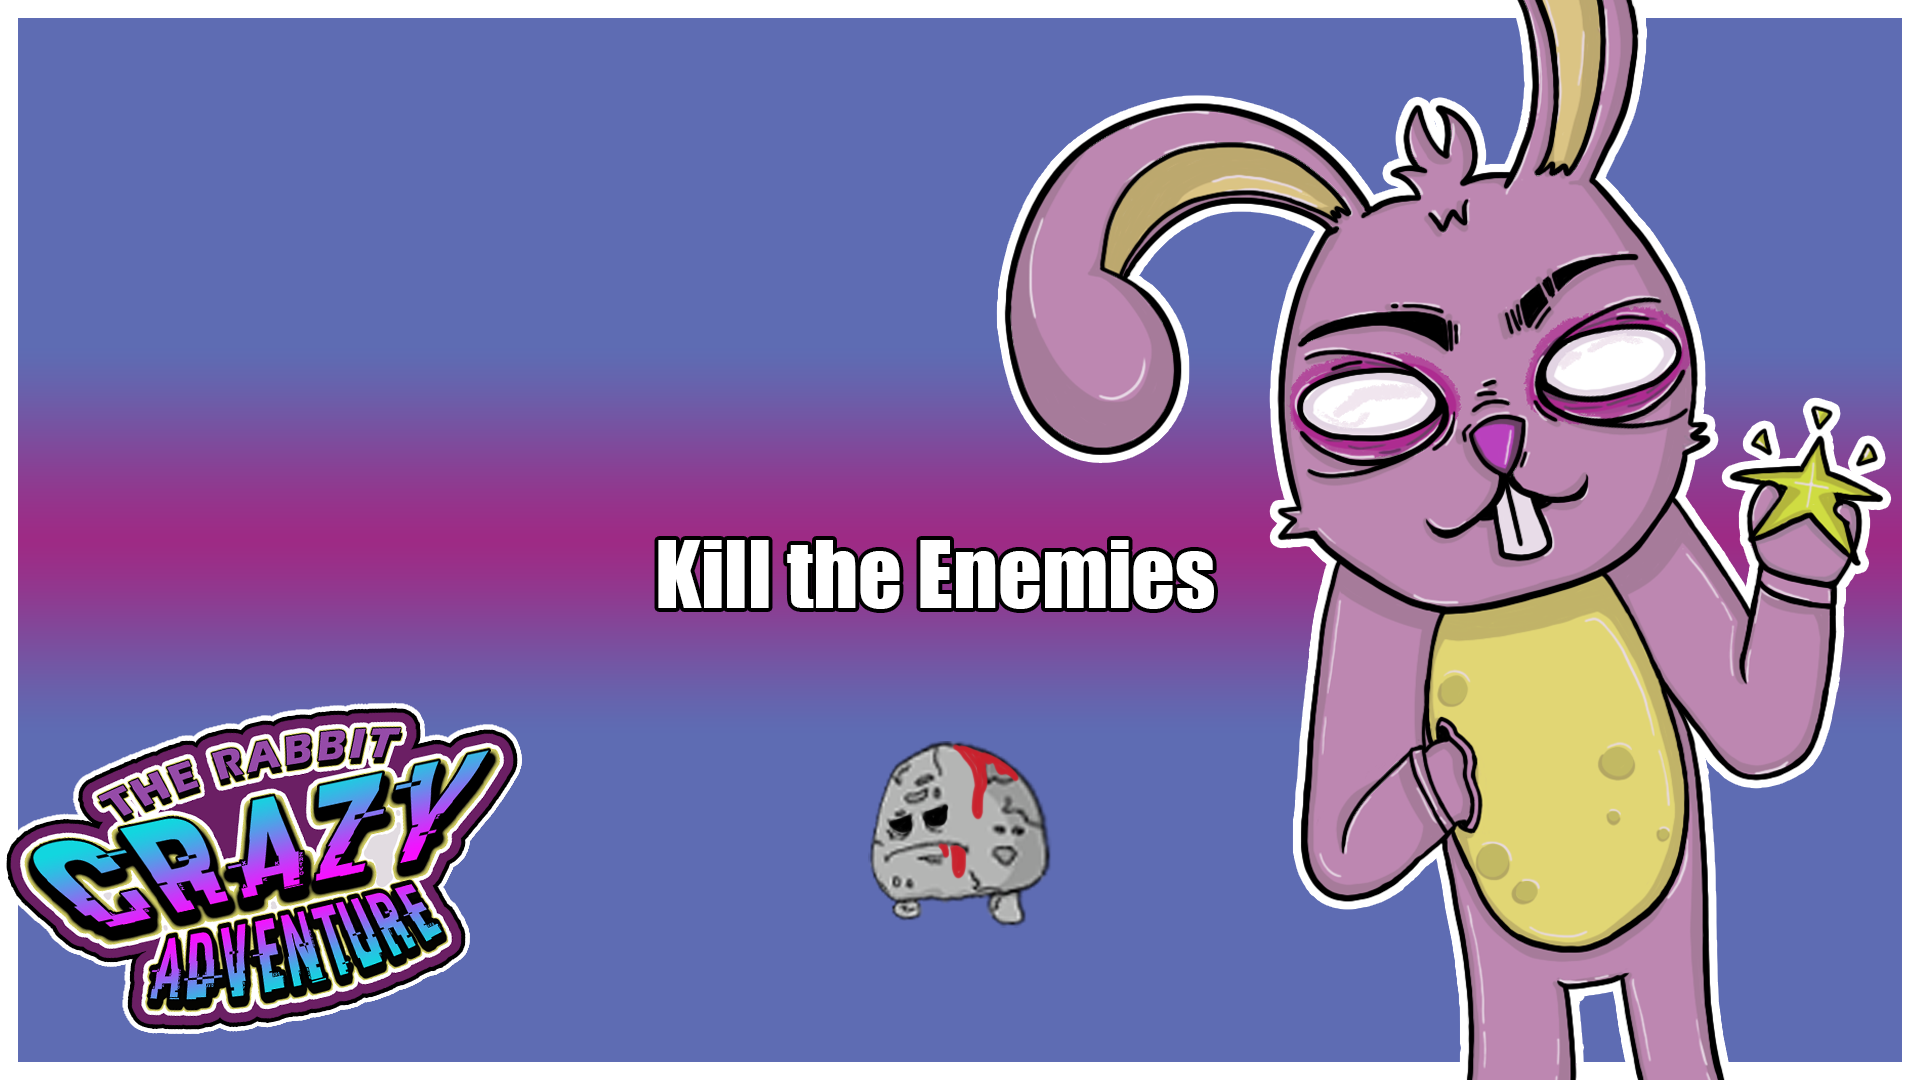 kill the enemies!